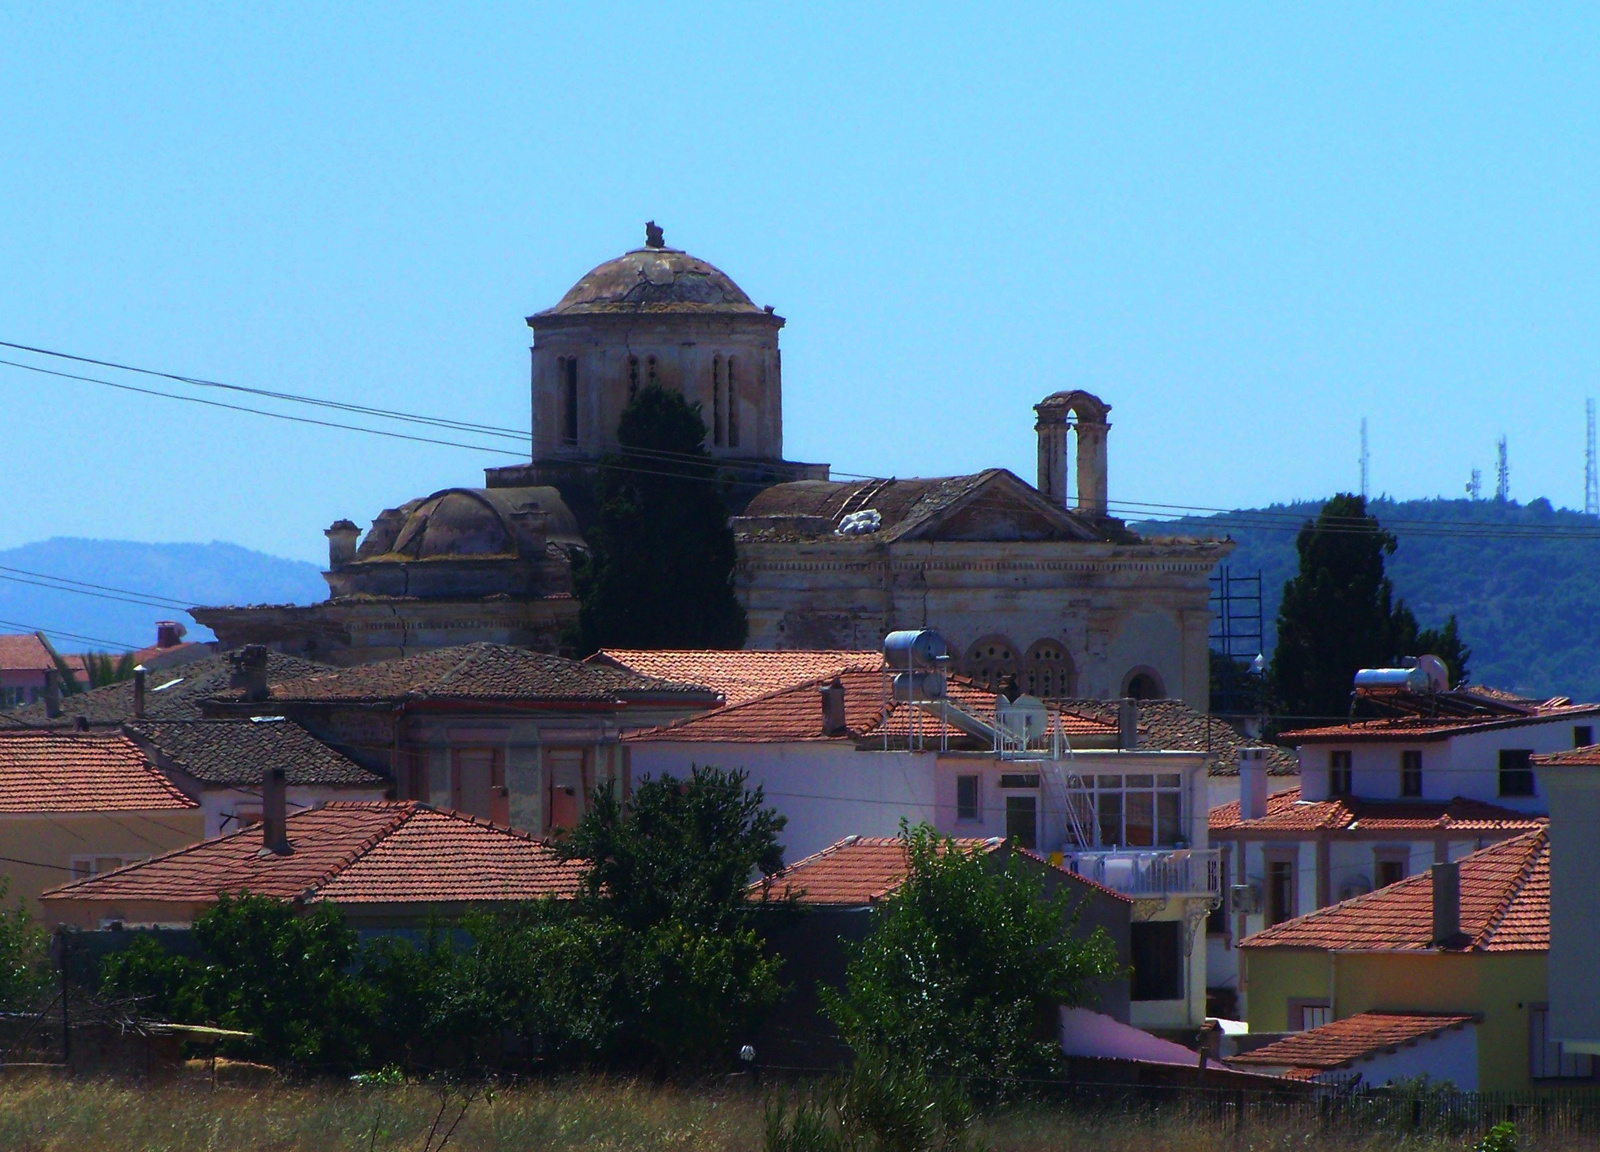 Görögkeleti templom a központban